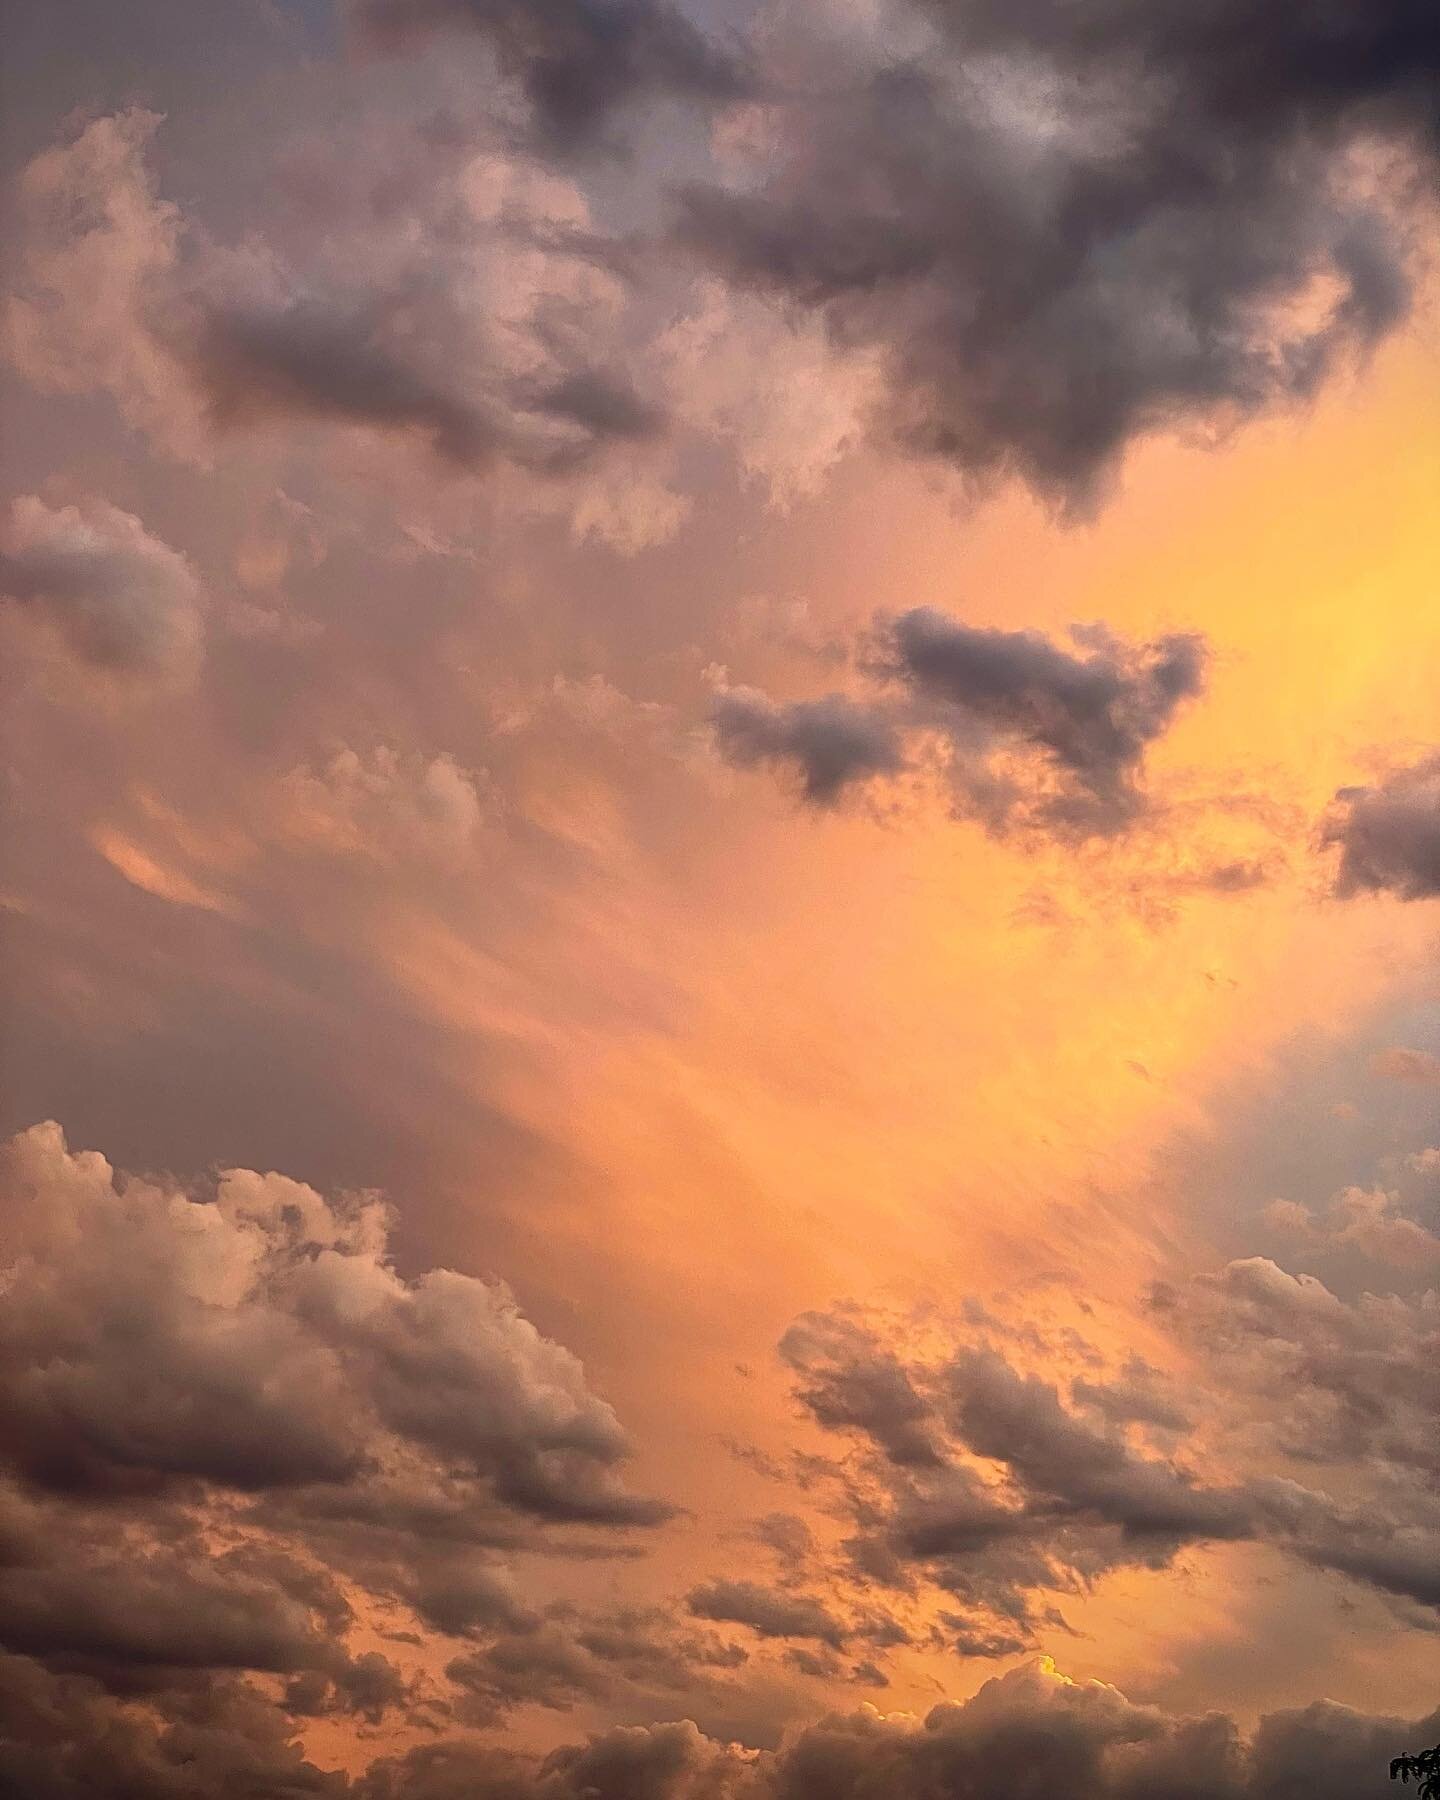 ⛅️ Sunset 
.
.
.
.
.
.
#clouds#crazysky#sunset#sky#nature#beautiful#instagram#instagood #cloudscape #cloudstagram #instaclouds #cloudsporn #clouds_of_our_world #crazyclouds #stormclouds #cloudscapes #clouds☁ #headintheclouds#cloudsky#cloudsfordays #h